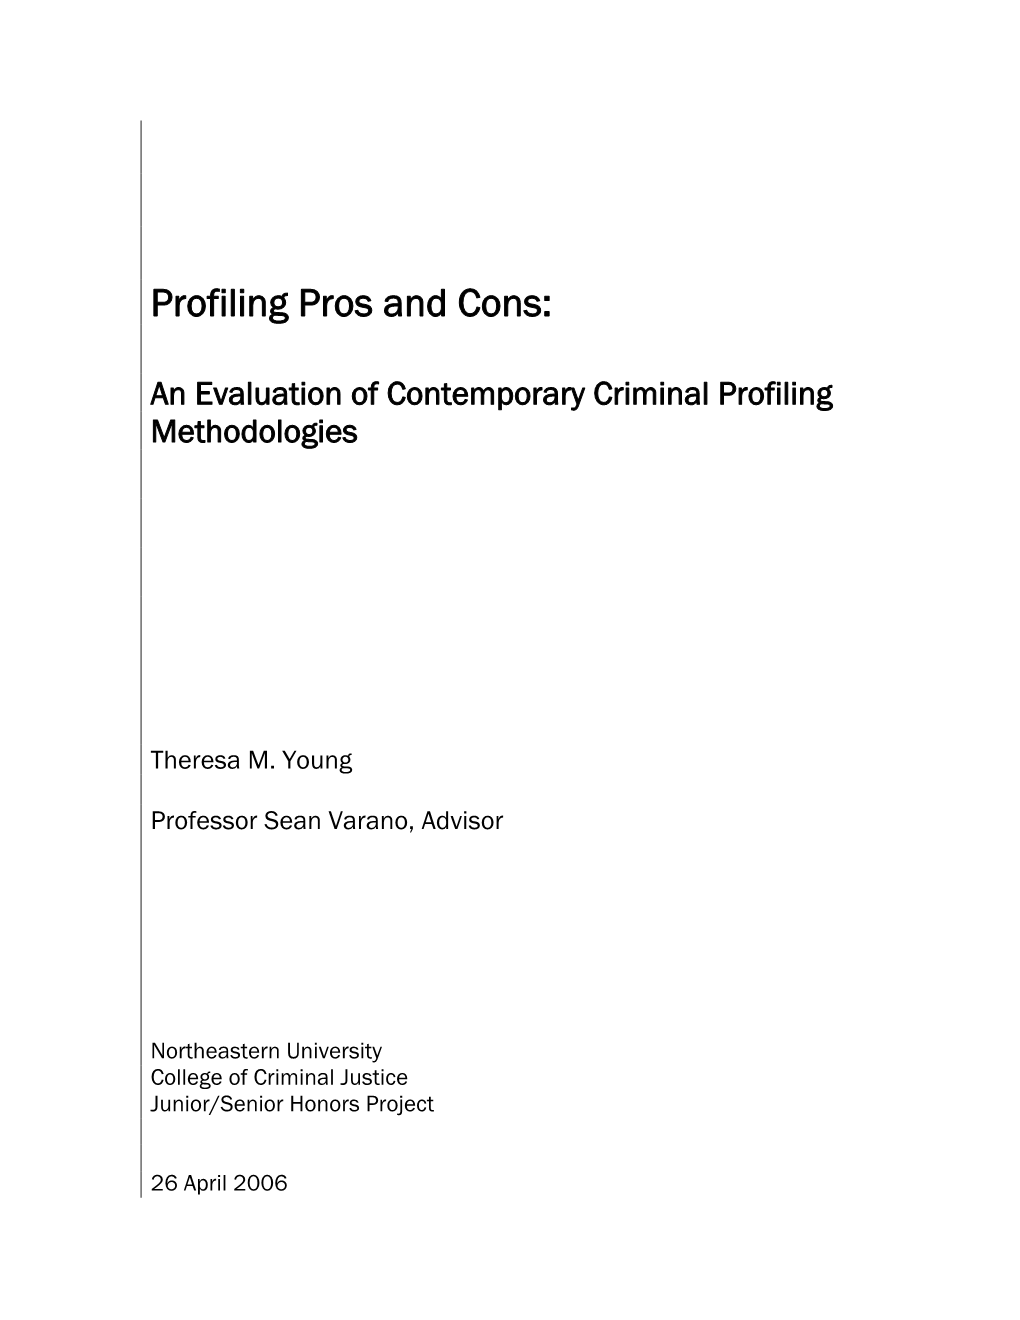 An Evaluation of Contemporary Criminal Profiling Methodologies